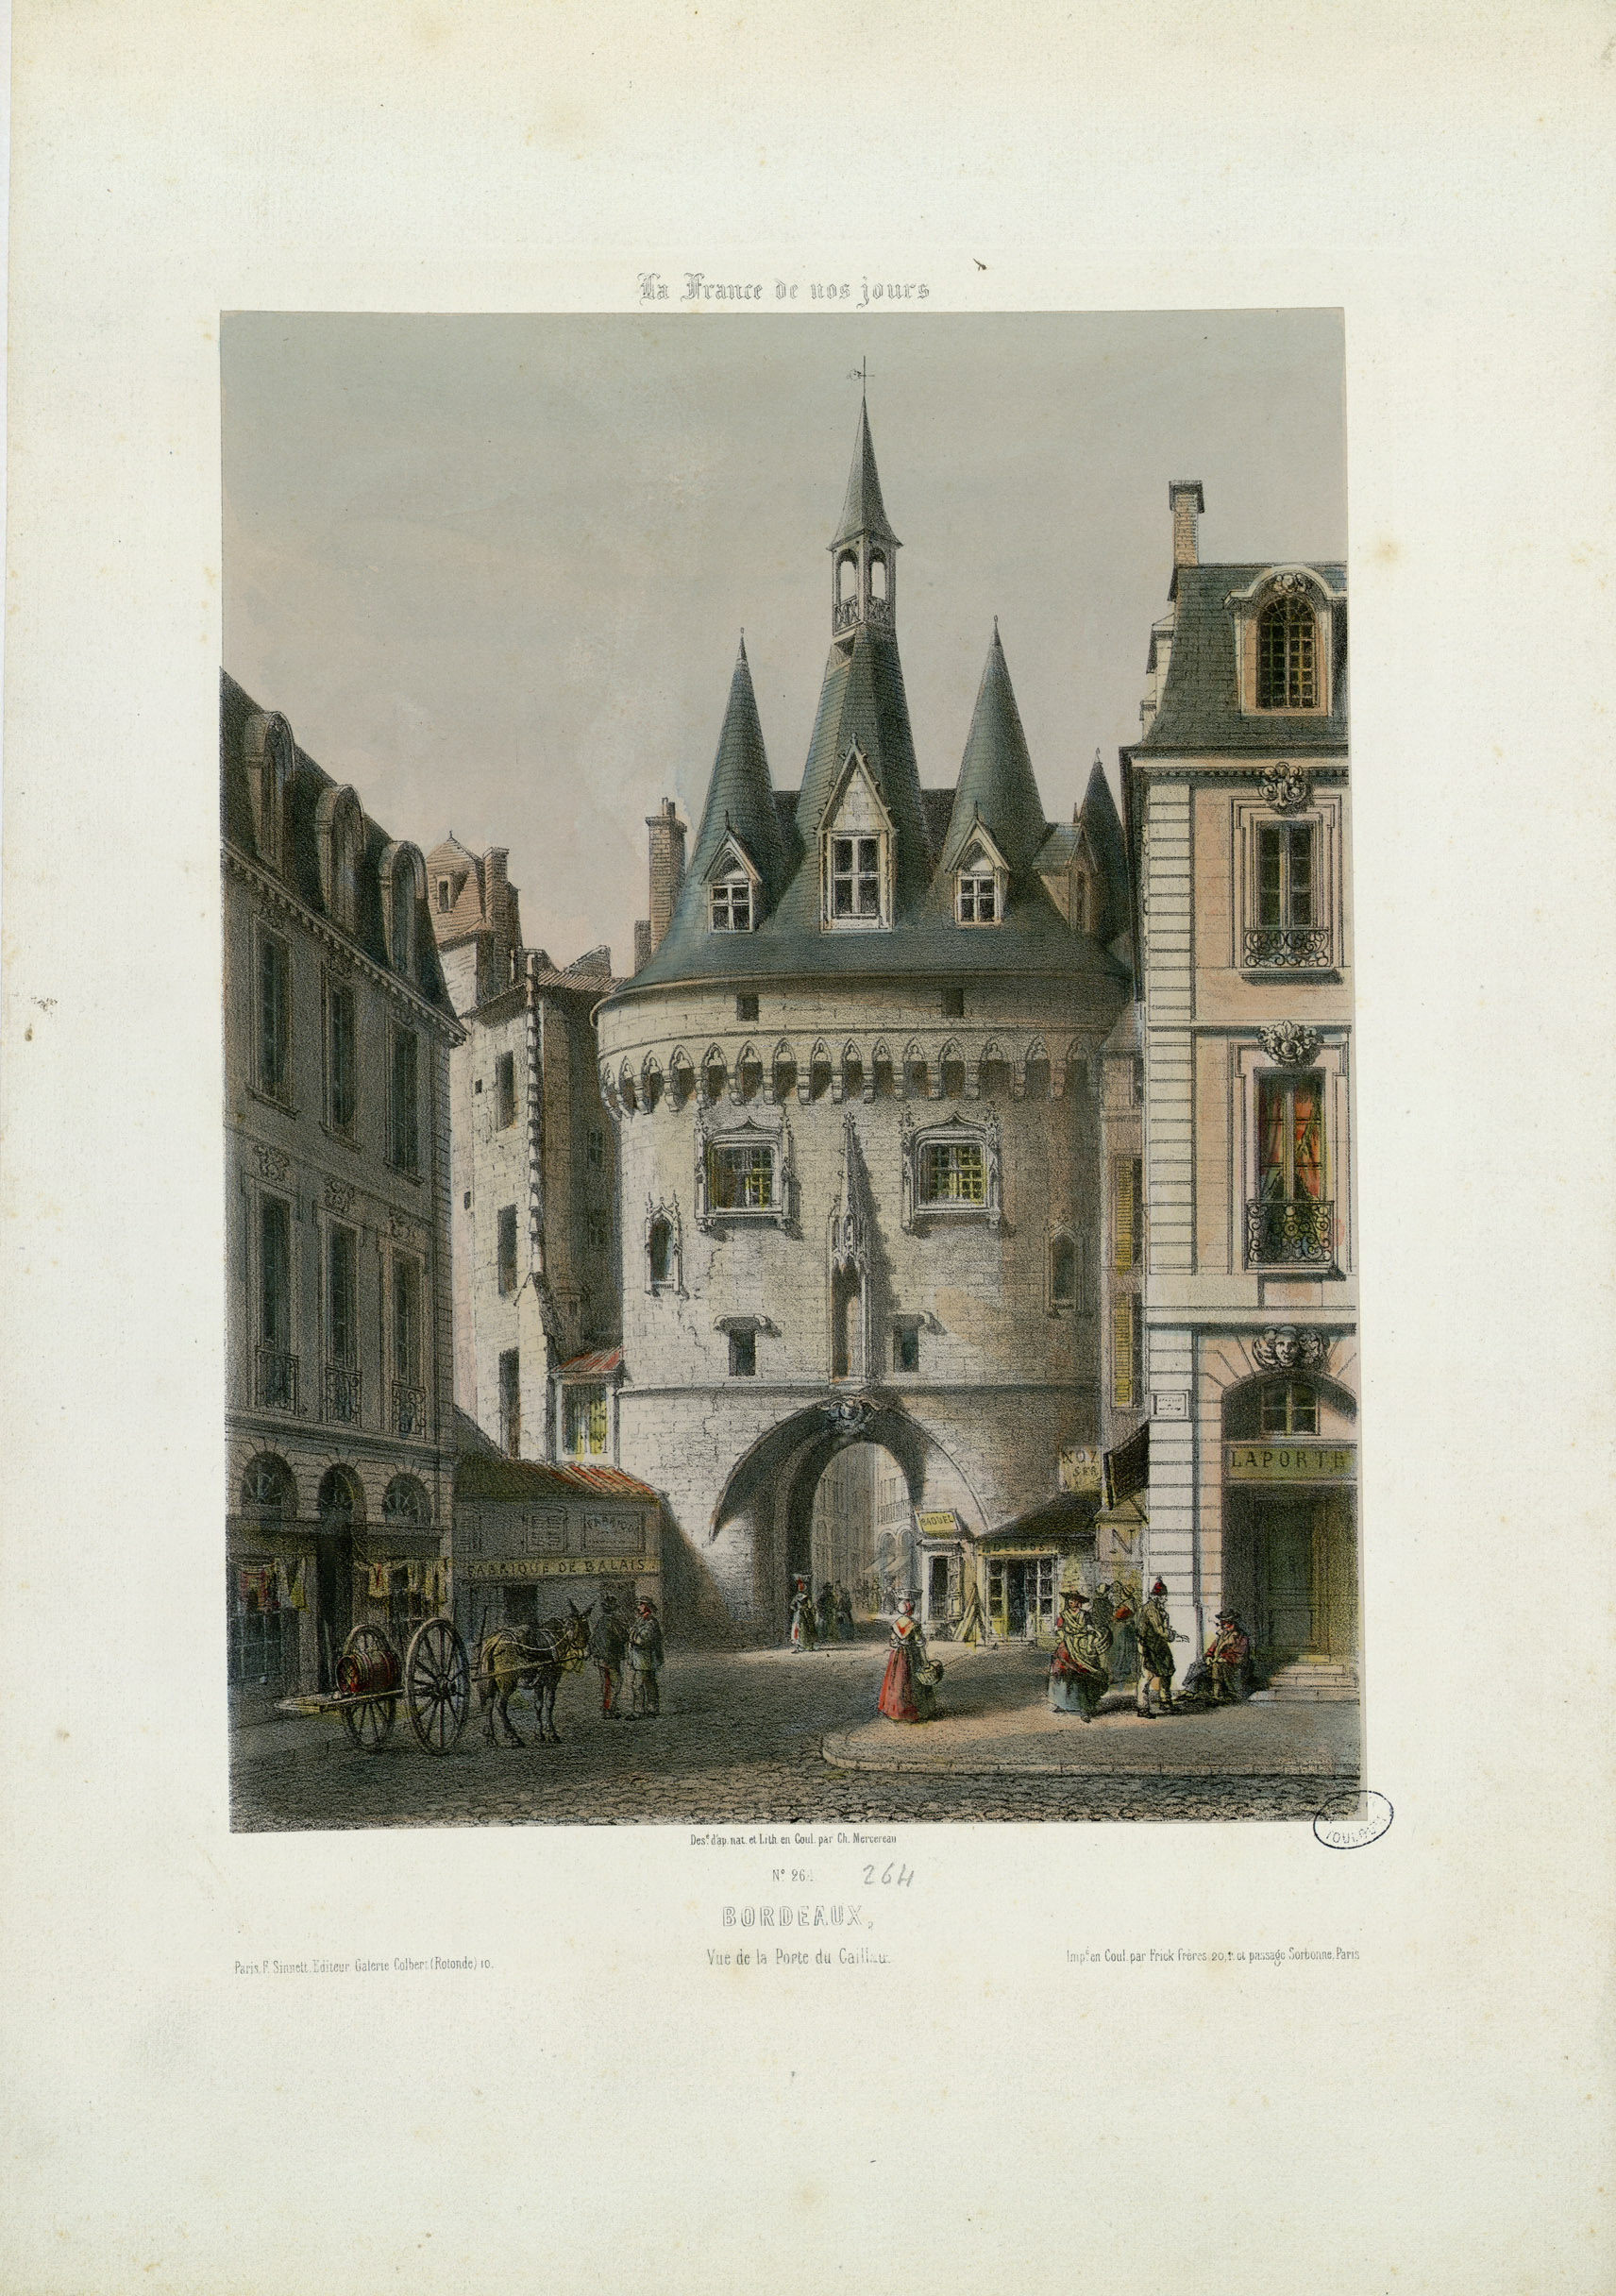 Porte Cailhau, Bordeaux (circa 1860)